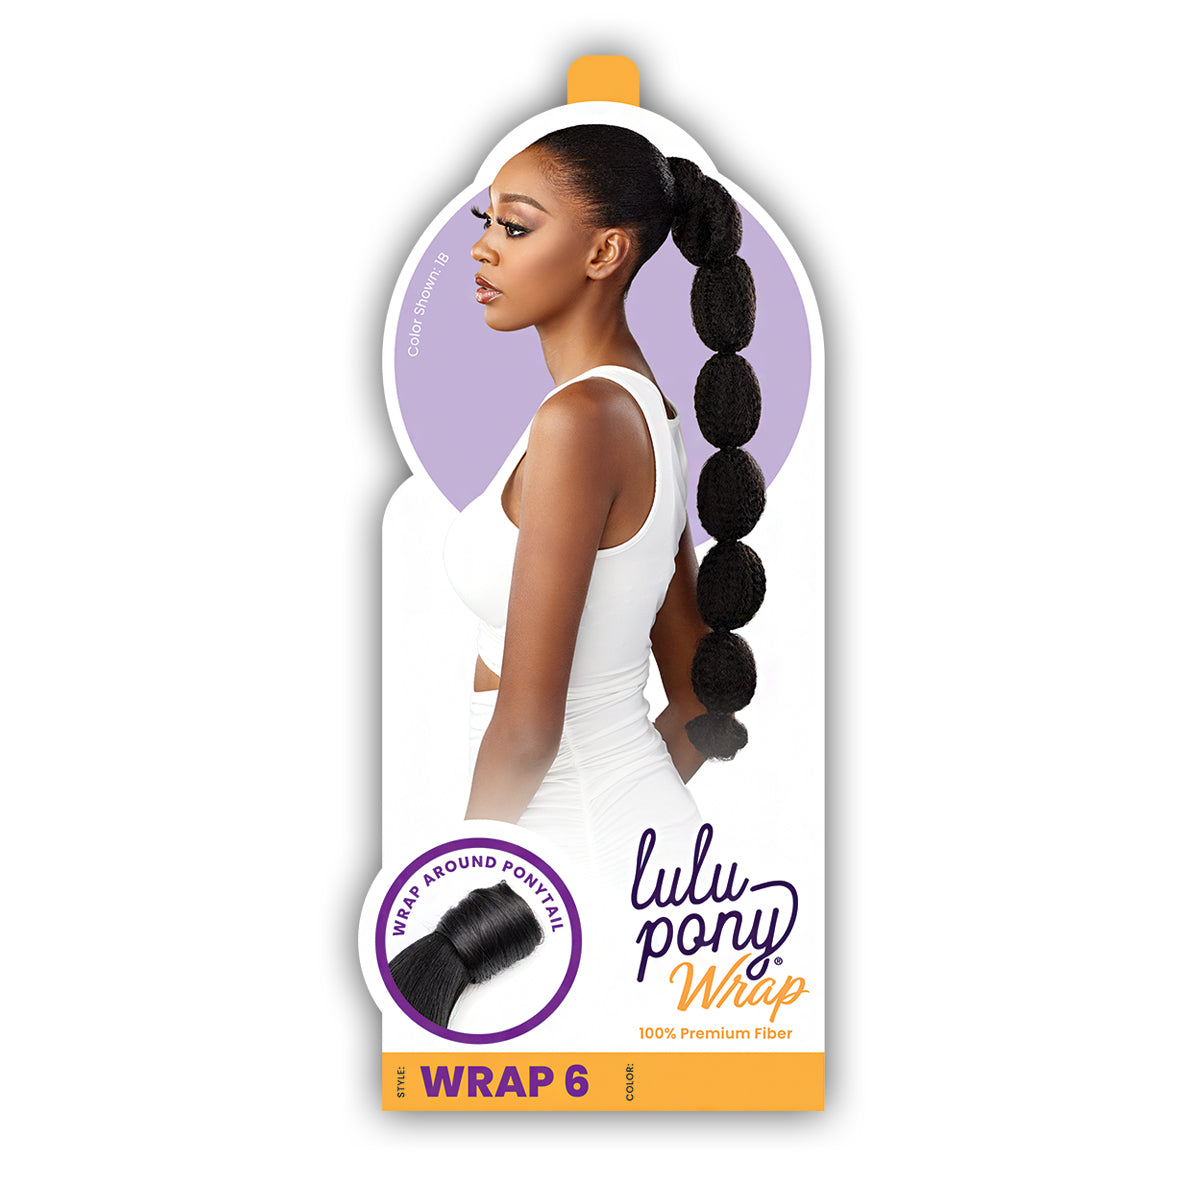 Sensationnel Synthetic Hair Ponytail Lulu Pony Wrap - WRAP 6